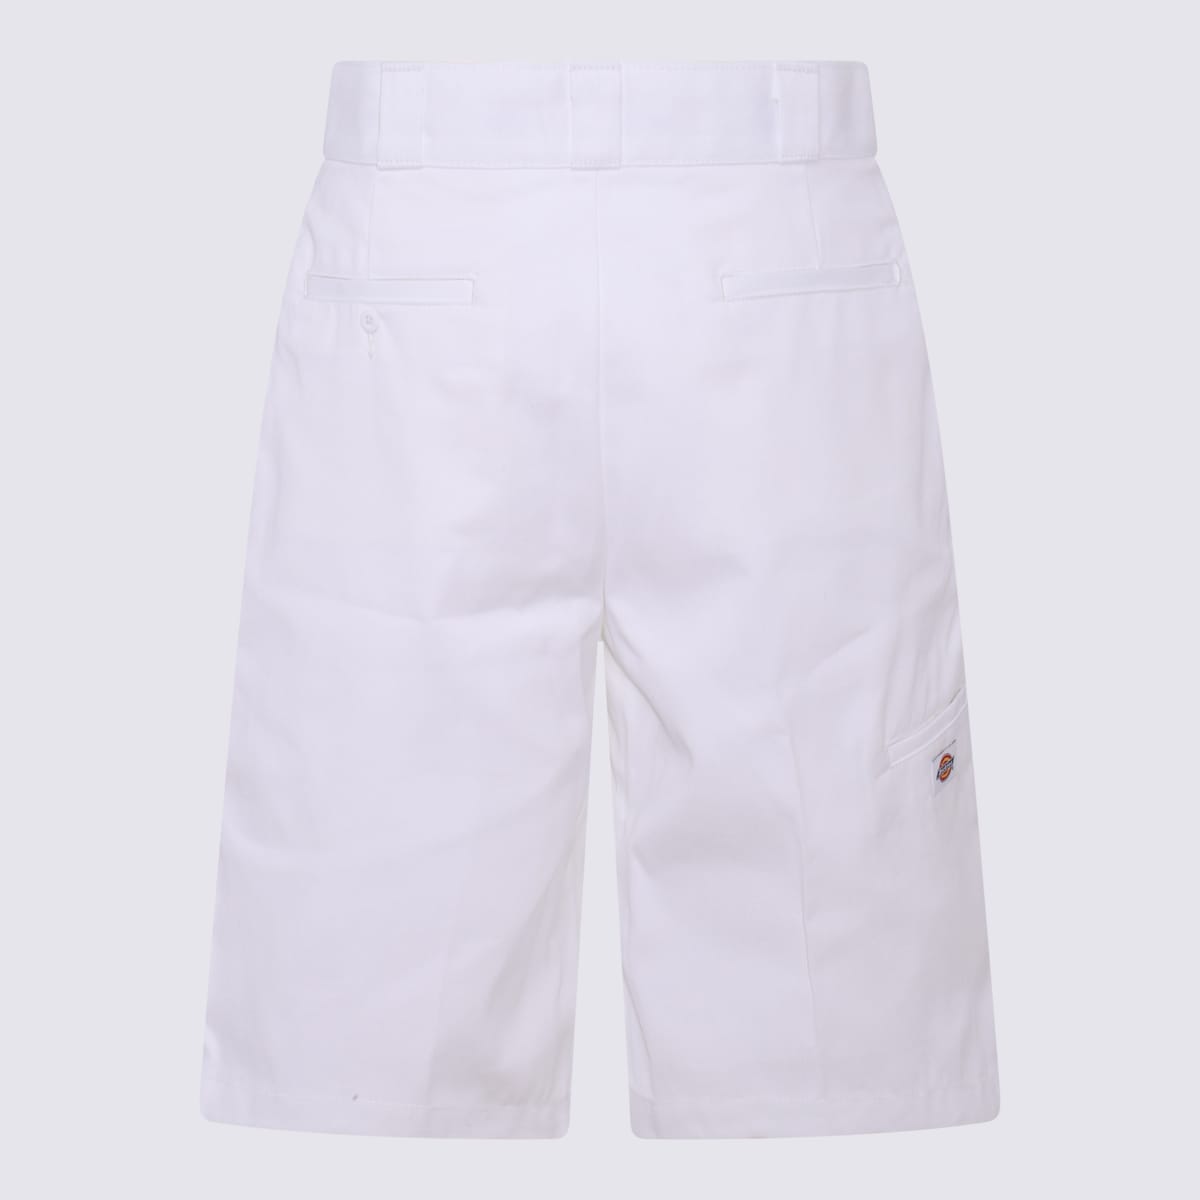 White Cotton Blend Shorts